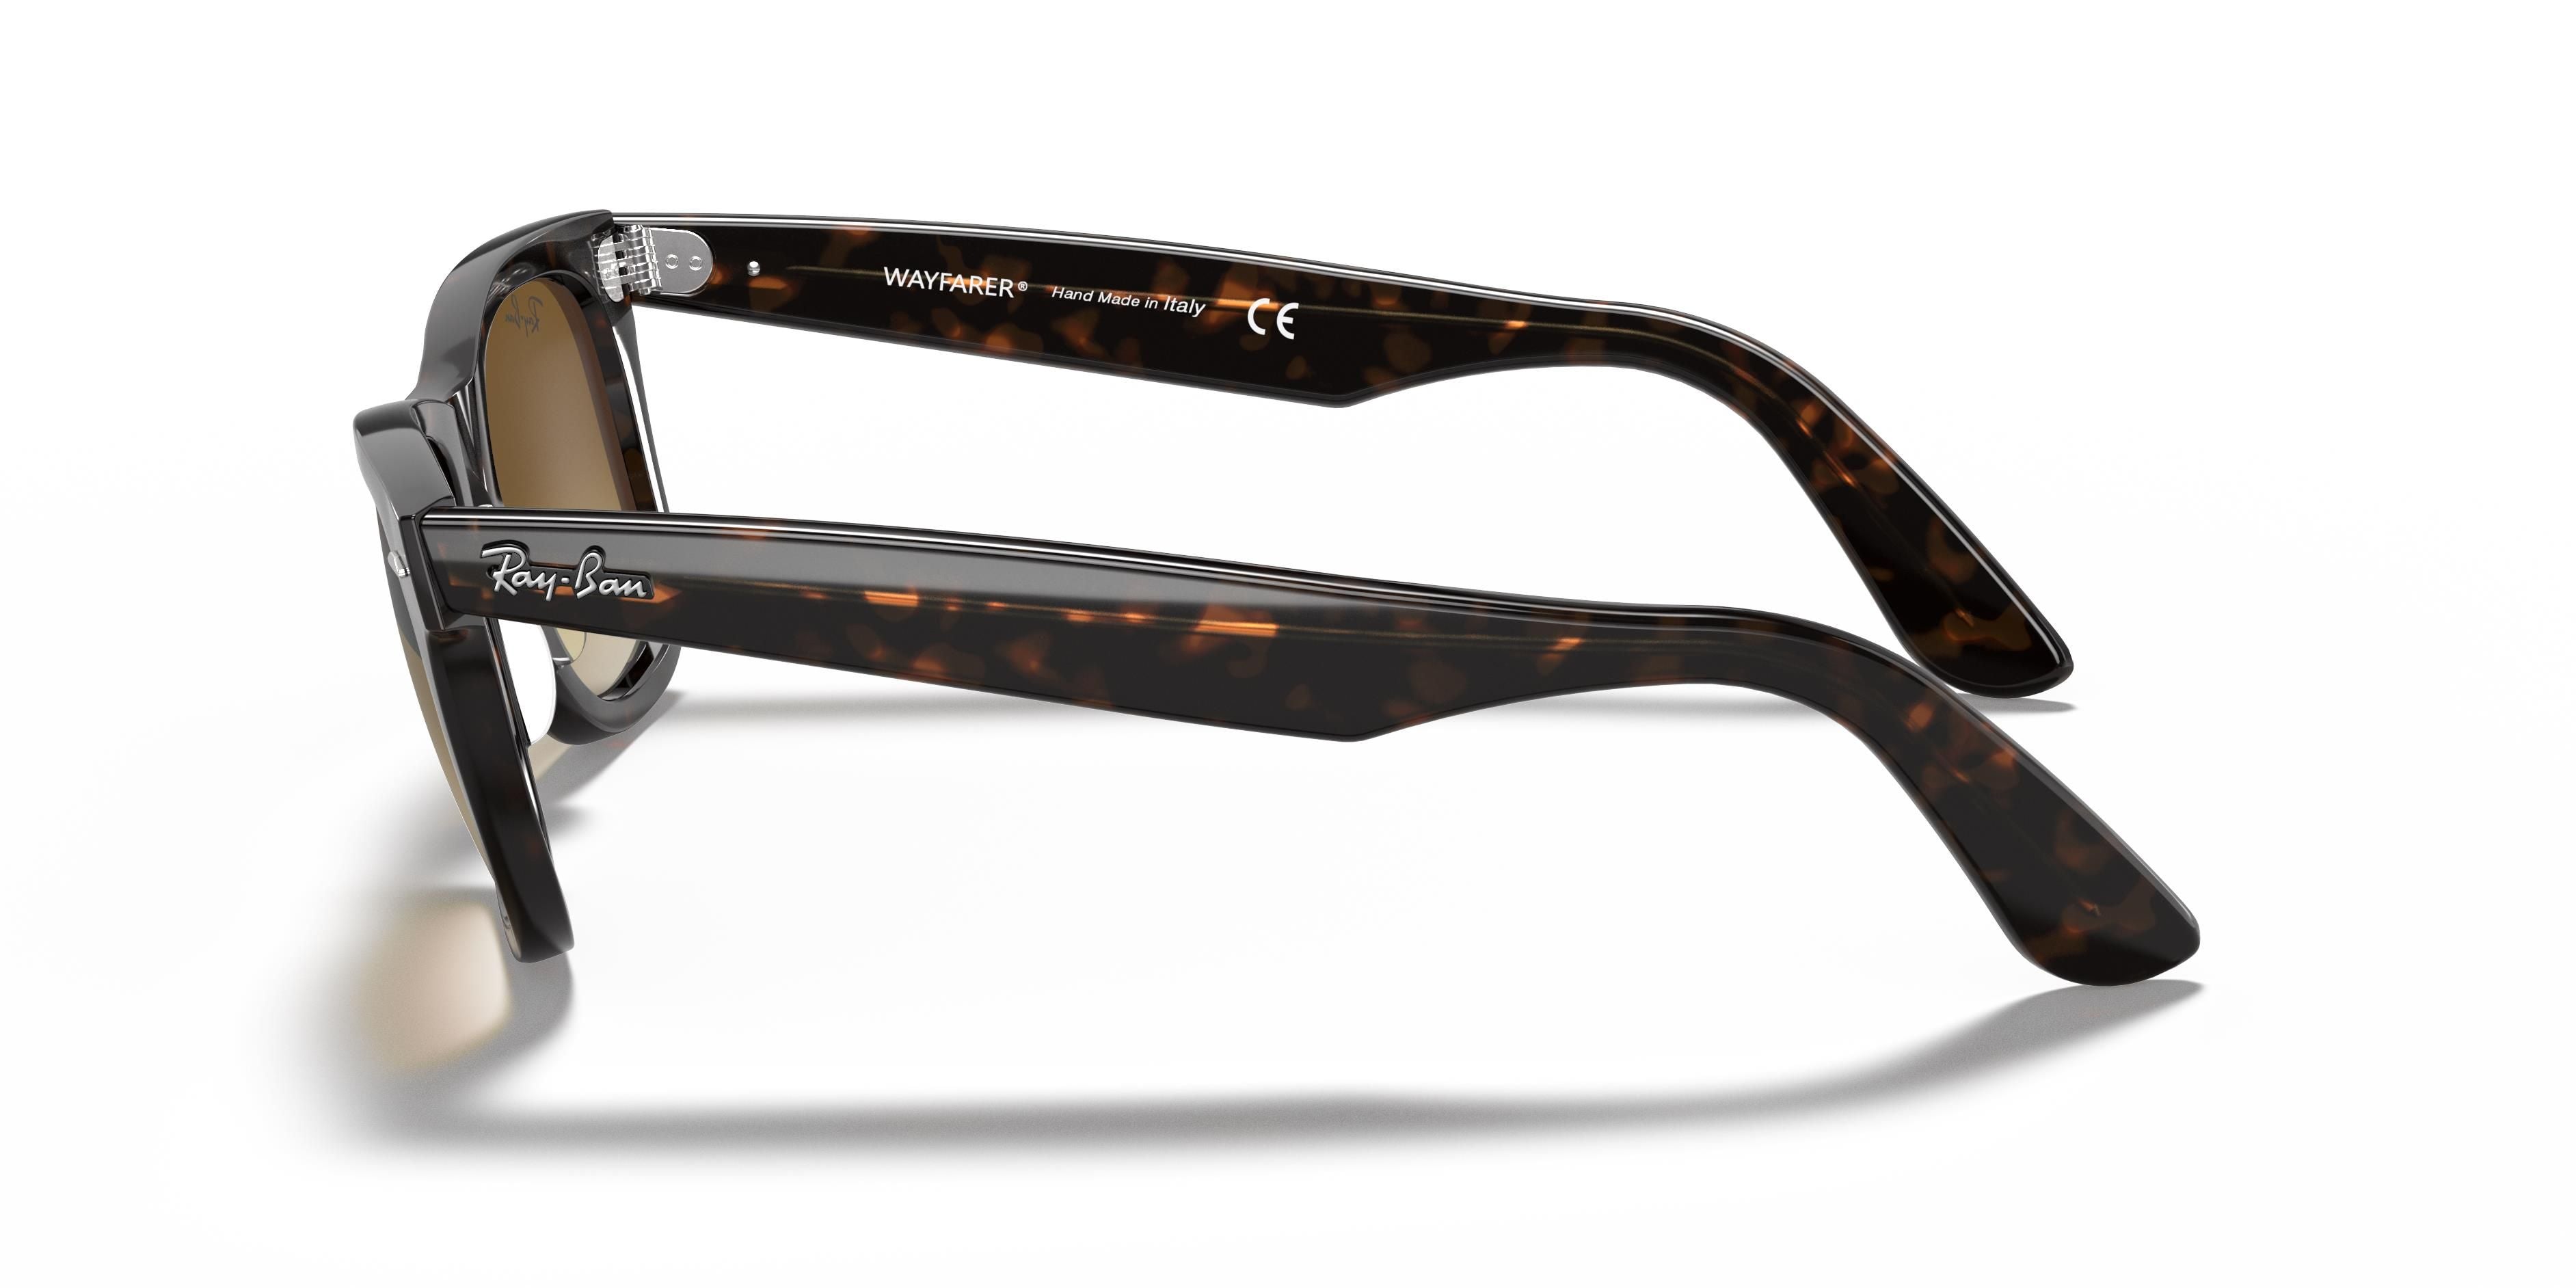 RAY-BAN Original Wayfarer Classic Sunglasses - Polished Tortoise - Brown Lens